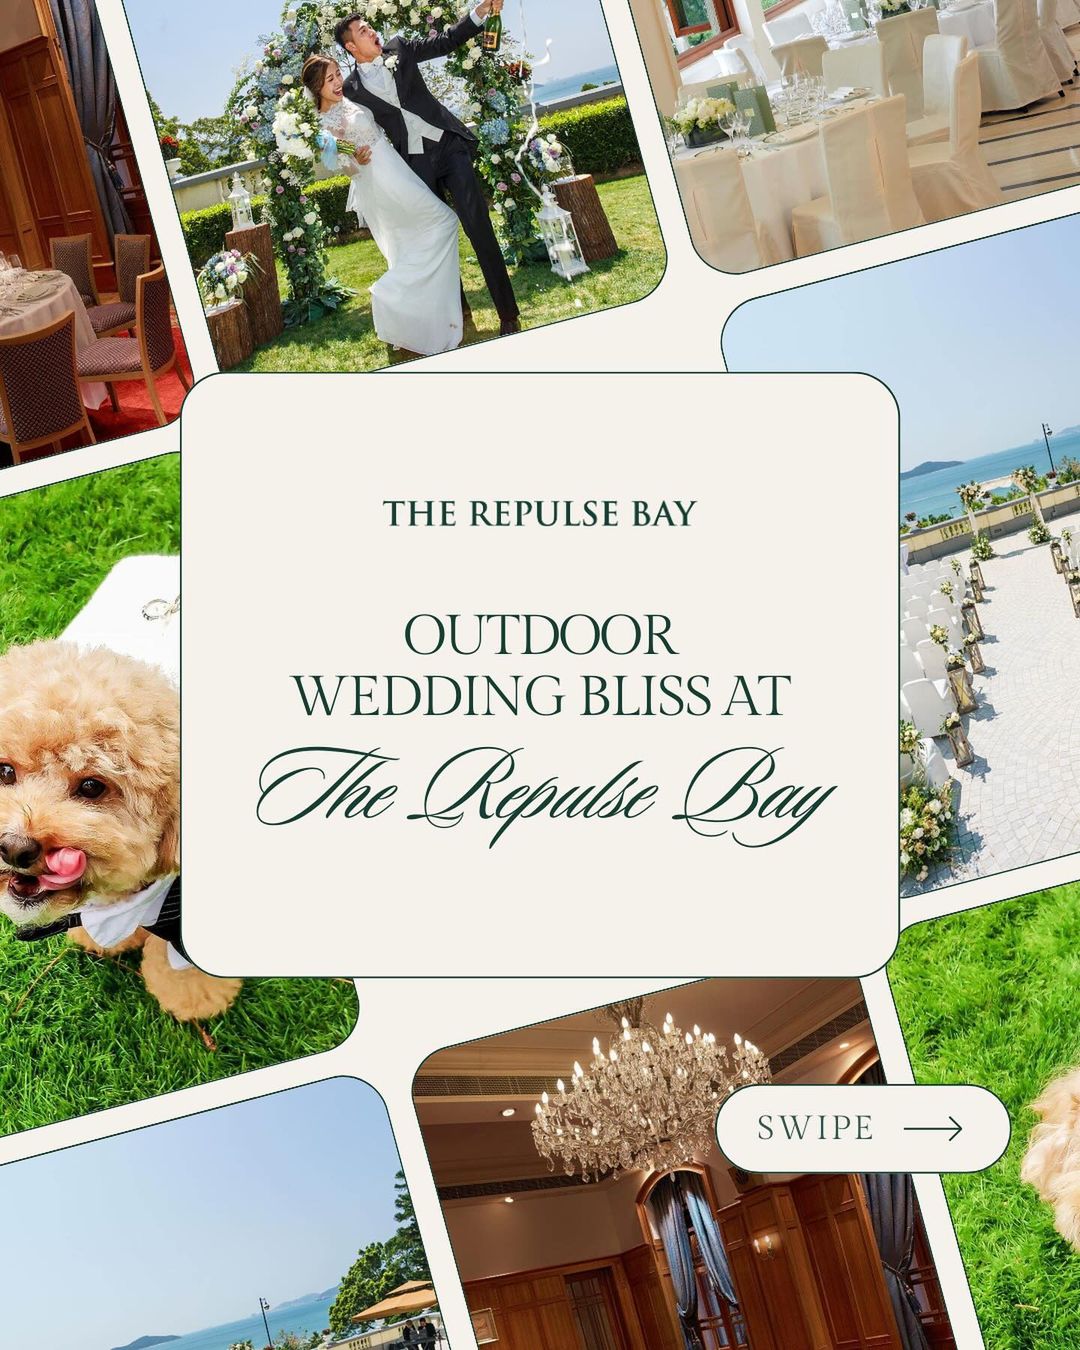 沒有比 #TheRepulseBay 更令人驚艷的室外婚禮場地了，這裡的郁郁蔥蔥的綠色草坪上，宣讀誓詞的背景是壯麗的海景！⁠
⁠
通過Link in Bio，與The Repulse Bay的婚禮策劃師聯繫，了解現正提供的限時優惠套餐，其中包含豐富的浪漫福利和額外加贈項目。⁠
⁠
There is no other stunning setting for an outdoor wedding than #TheRepulseBay, where vows on a lush green lawn are backdropped by spectacular sea views!⁠
⁠
Contact The Repulse Bay wedding planners via the link in bio to find out about the ongoing limited-time package filled to the brim with romantic perks and extras.